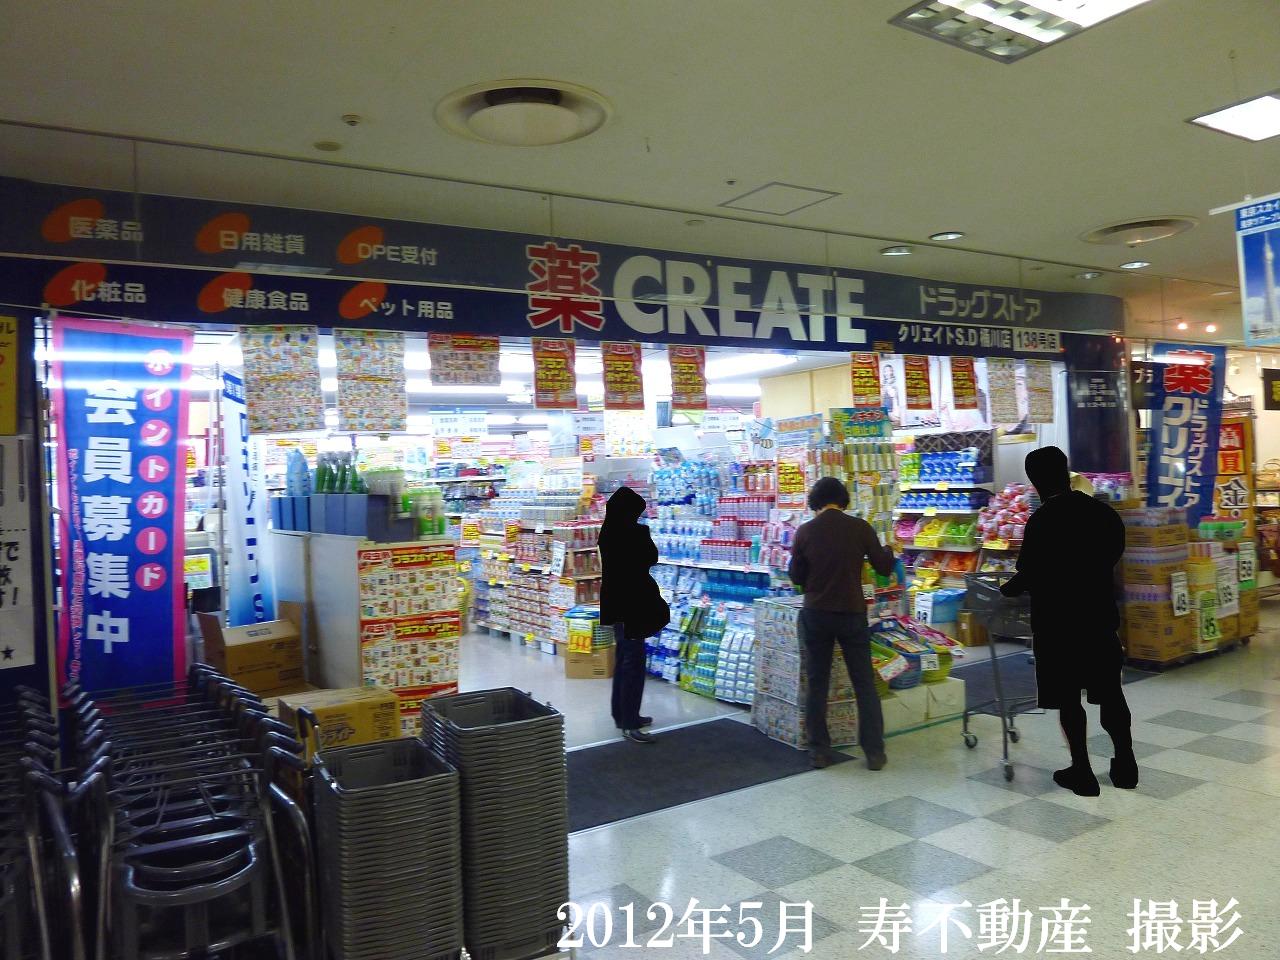 Dorakkusutoa. Create es ・ Dee Okegawa shop 990m until (drugstore)